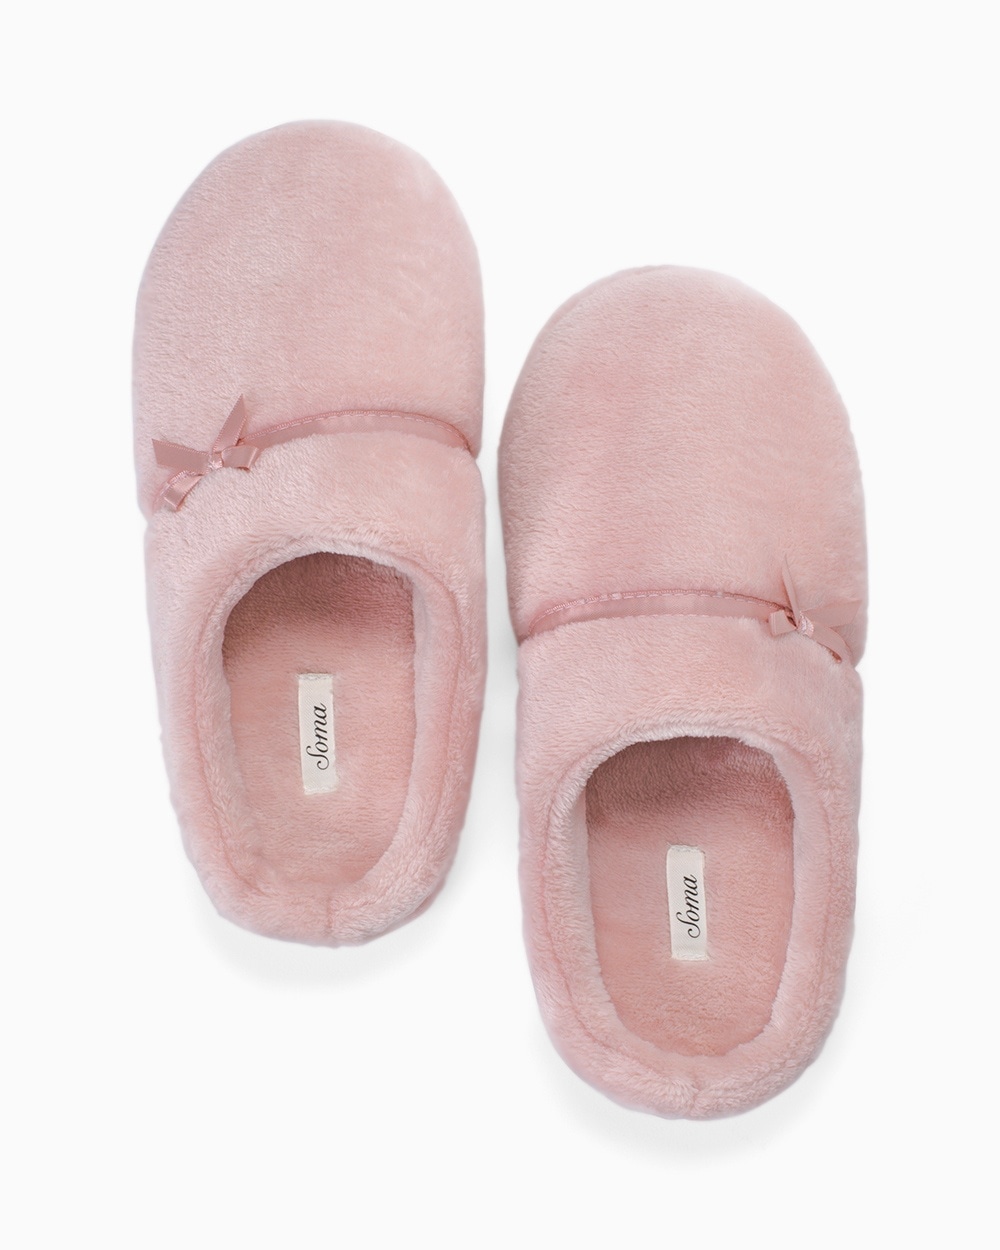 Plush Slippers Vintage Pink